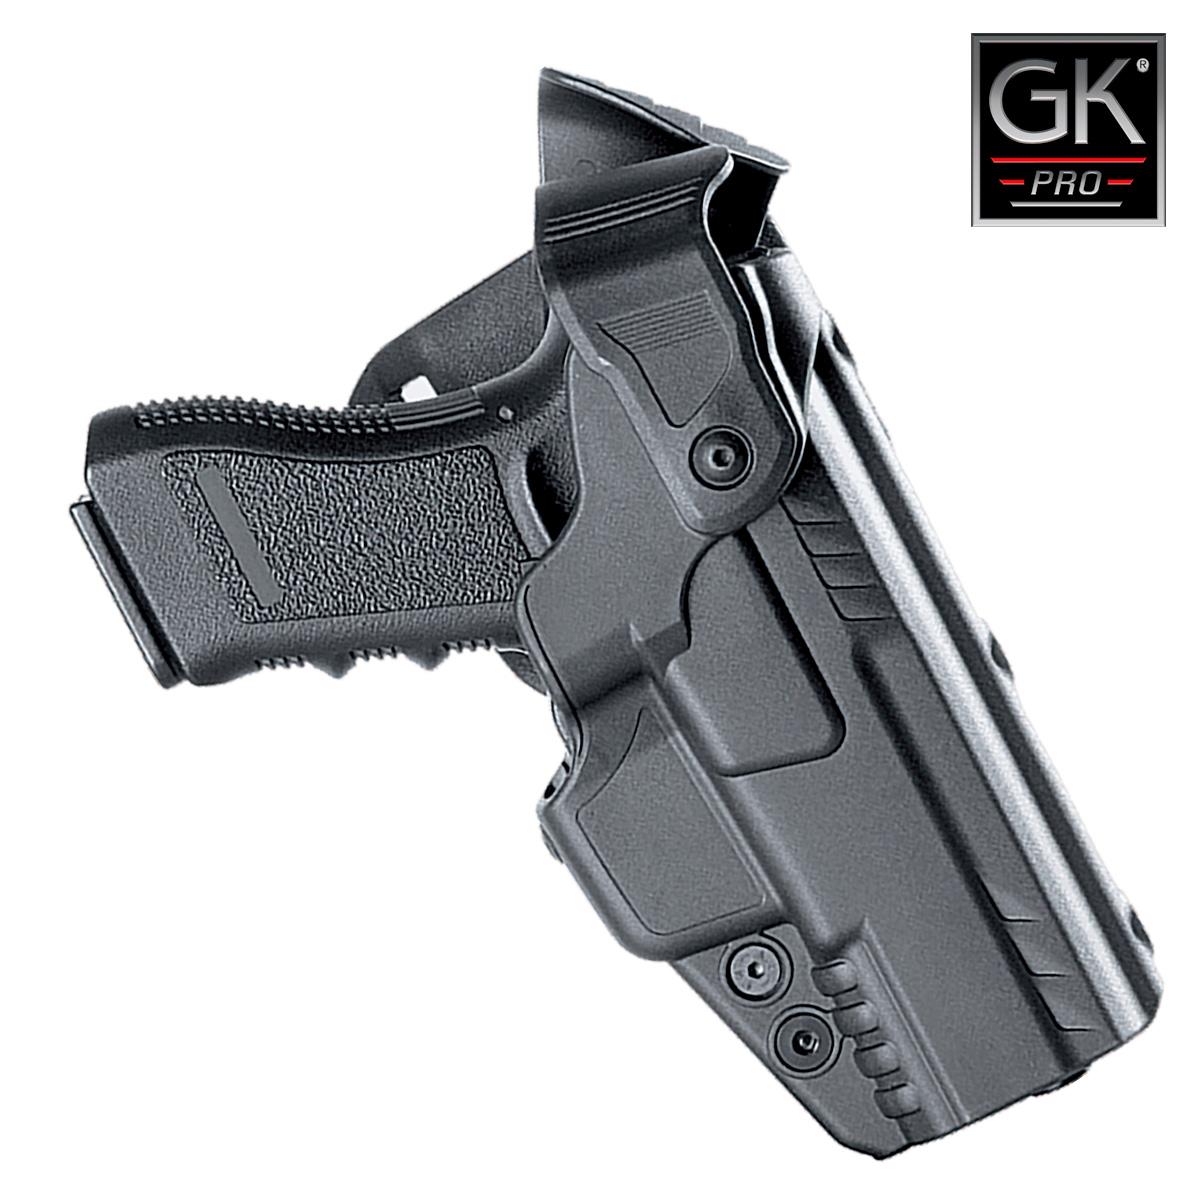 Funda GK para Pistola HK USP: 114,95 €